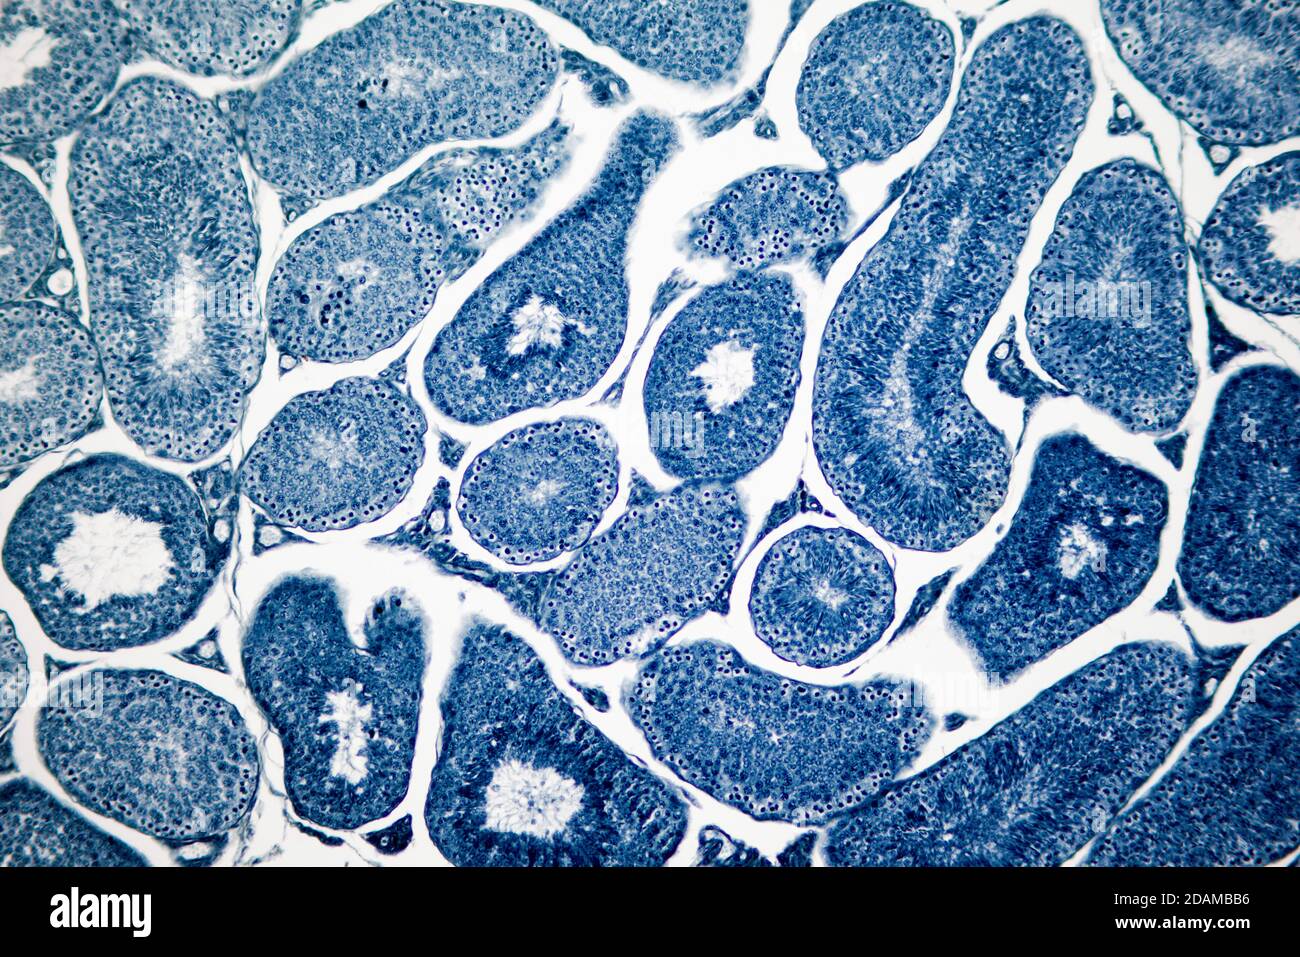 Human testis, light micrograph. Seen here are spermatogonia, spermatocytes undergoing meiosis, spermatids, and spermatozoa. Stock Photo